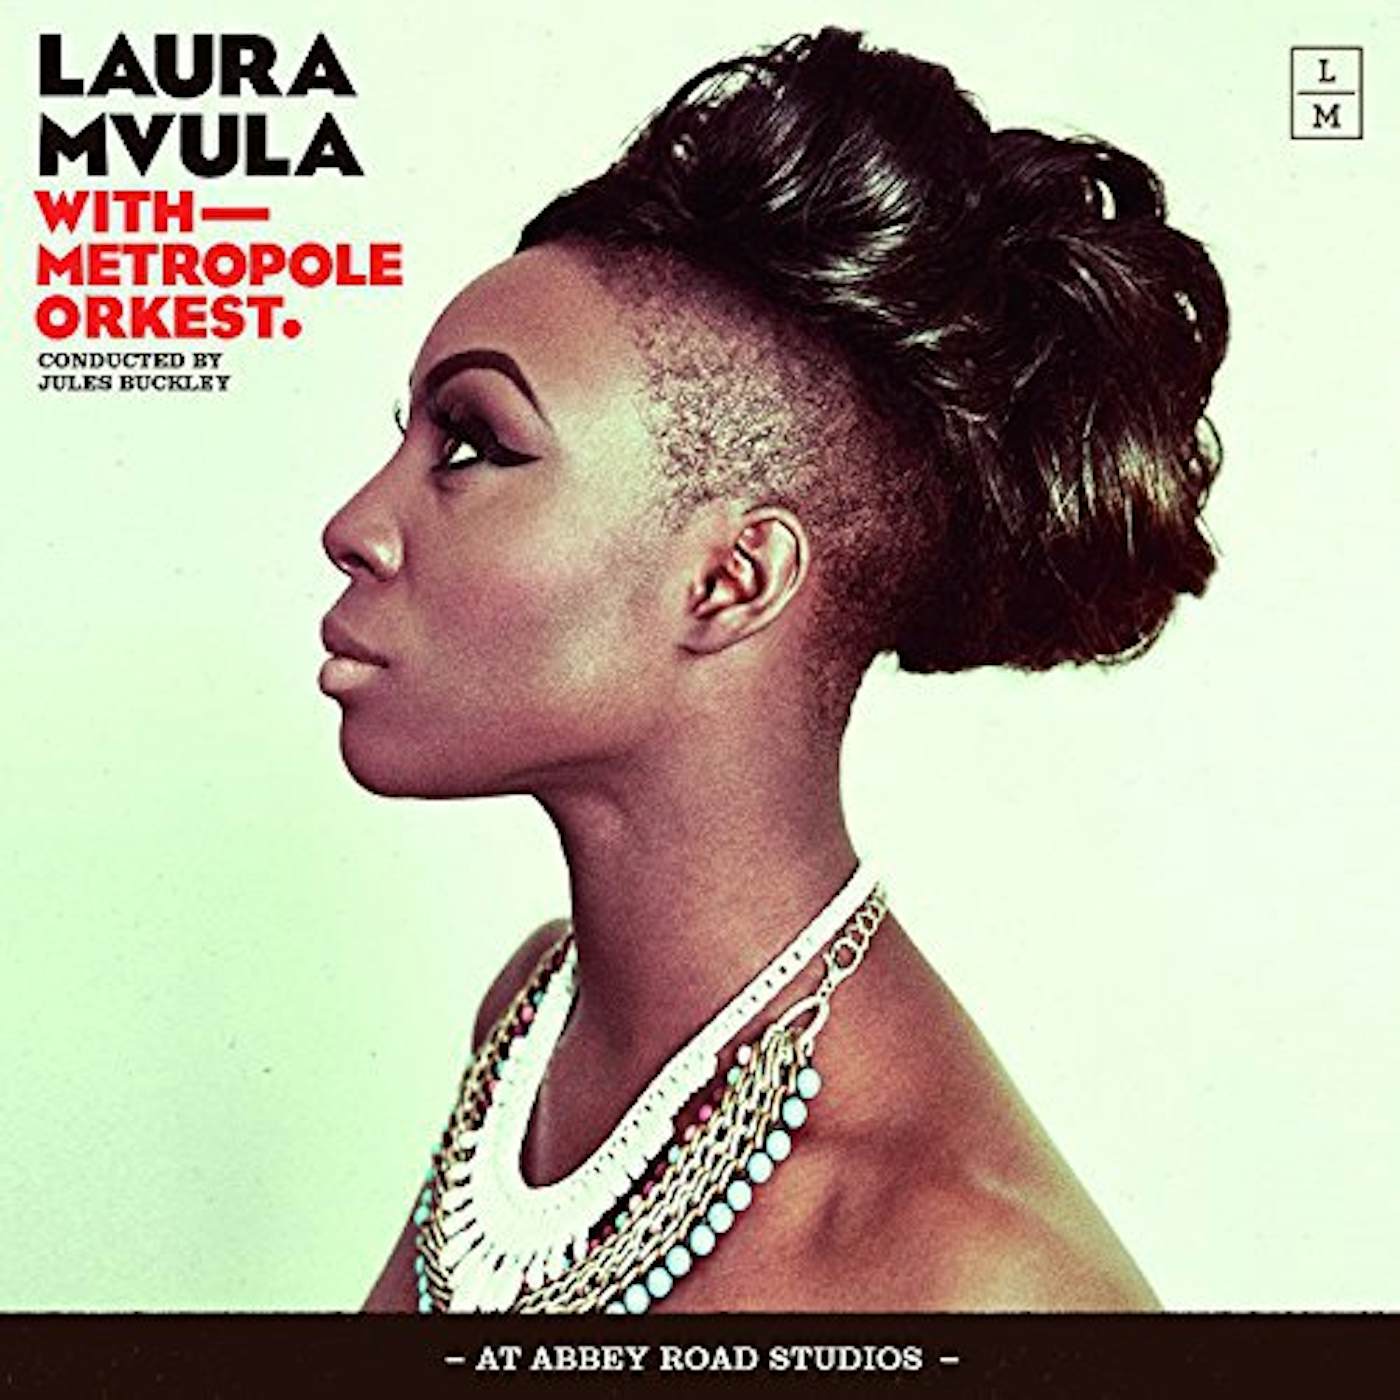 Laura Mvula WITH METROPOLE ORKEST Vinyl Record